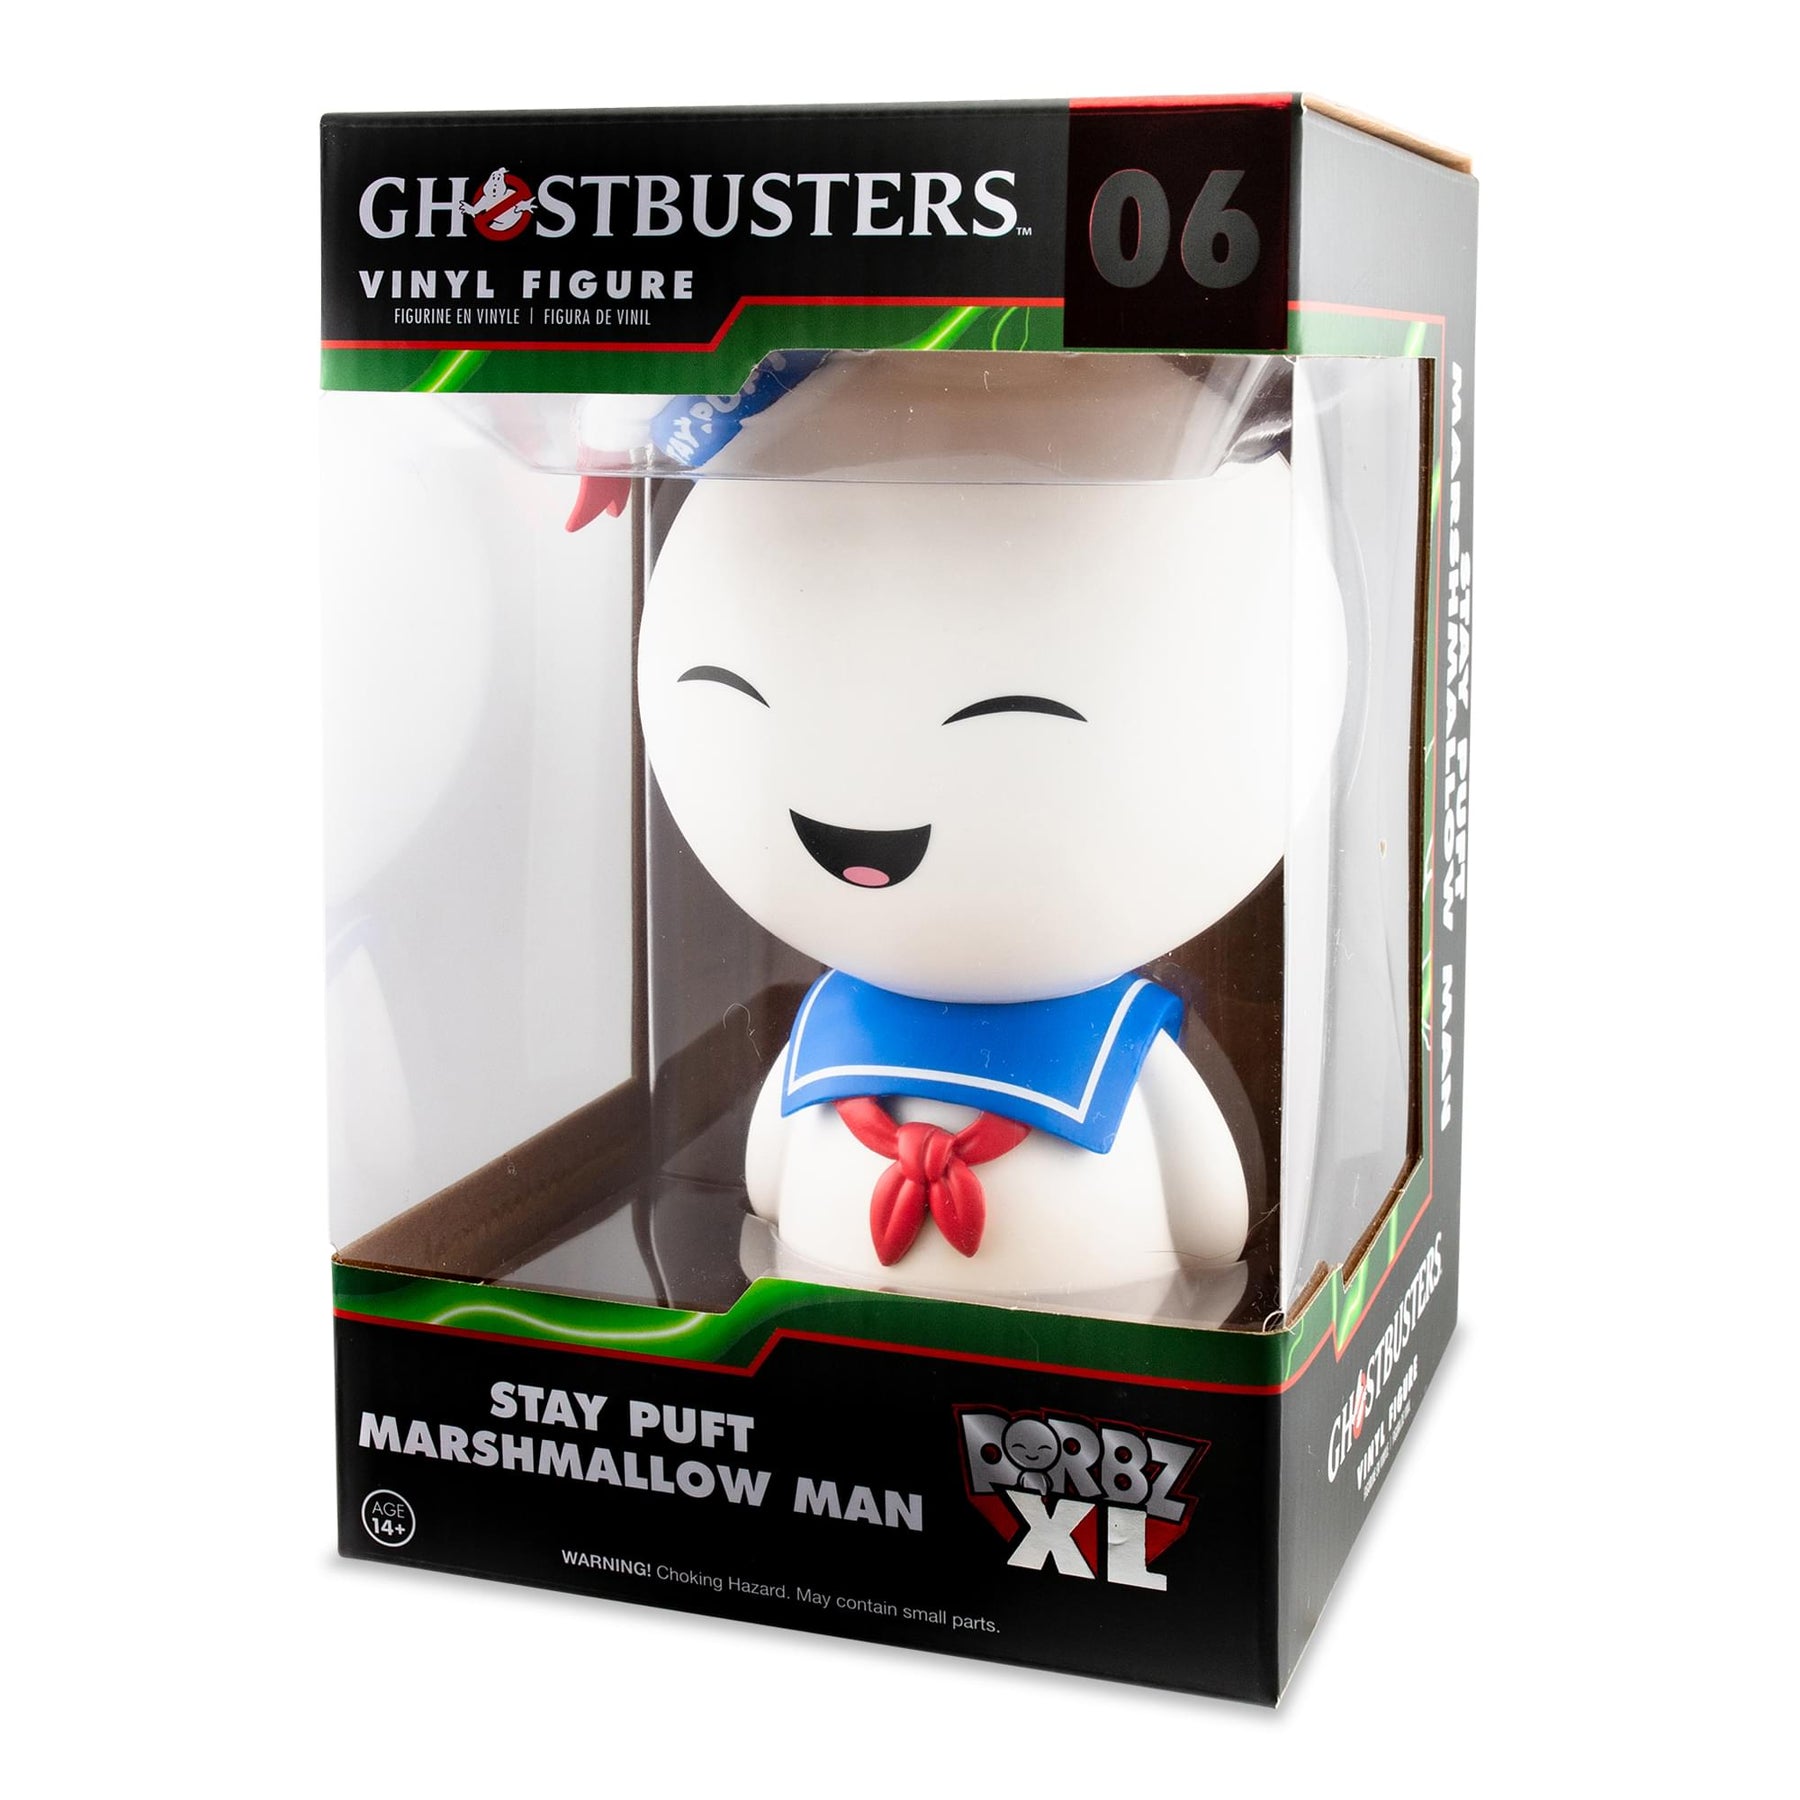 Ghostbusters 6" Dorbz XL Vinyl Figure Stay Puft Marshmallow Man